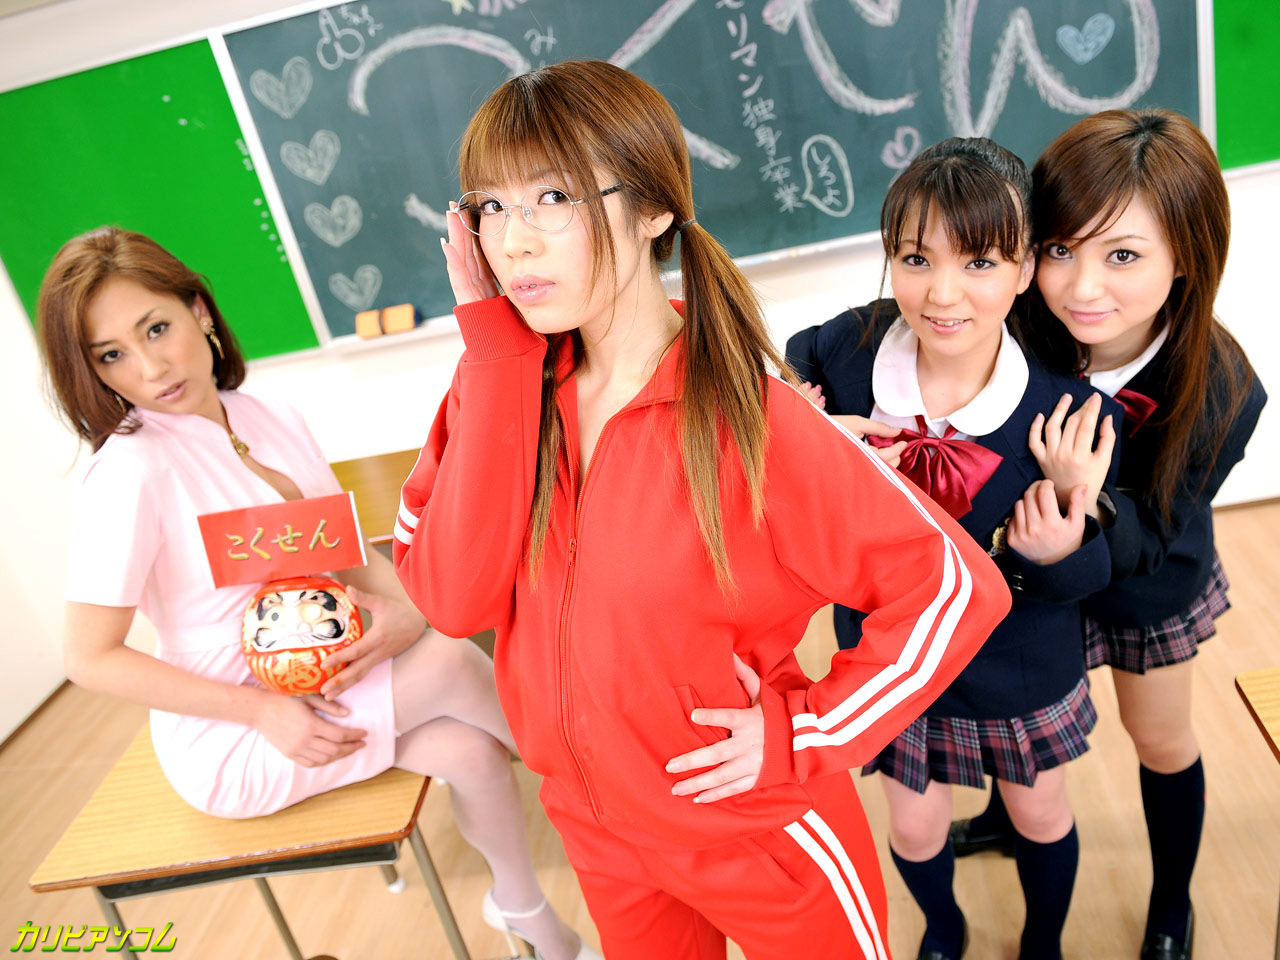 Naughty Asian Schoolgirls Enjoying Wild Groupsex With Hung Teachers In Class